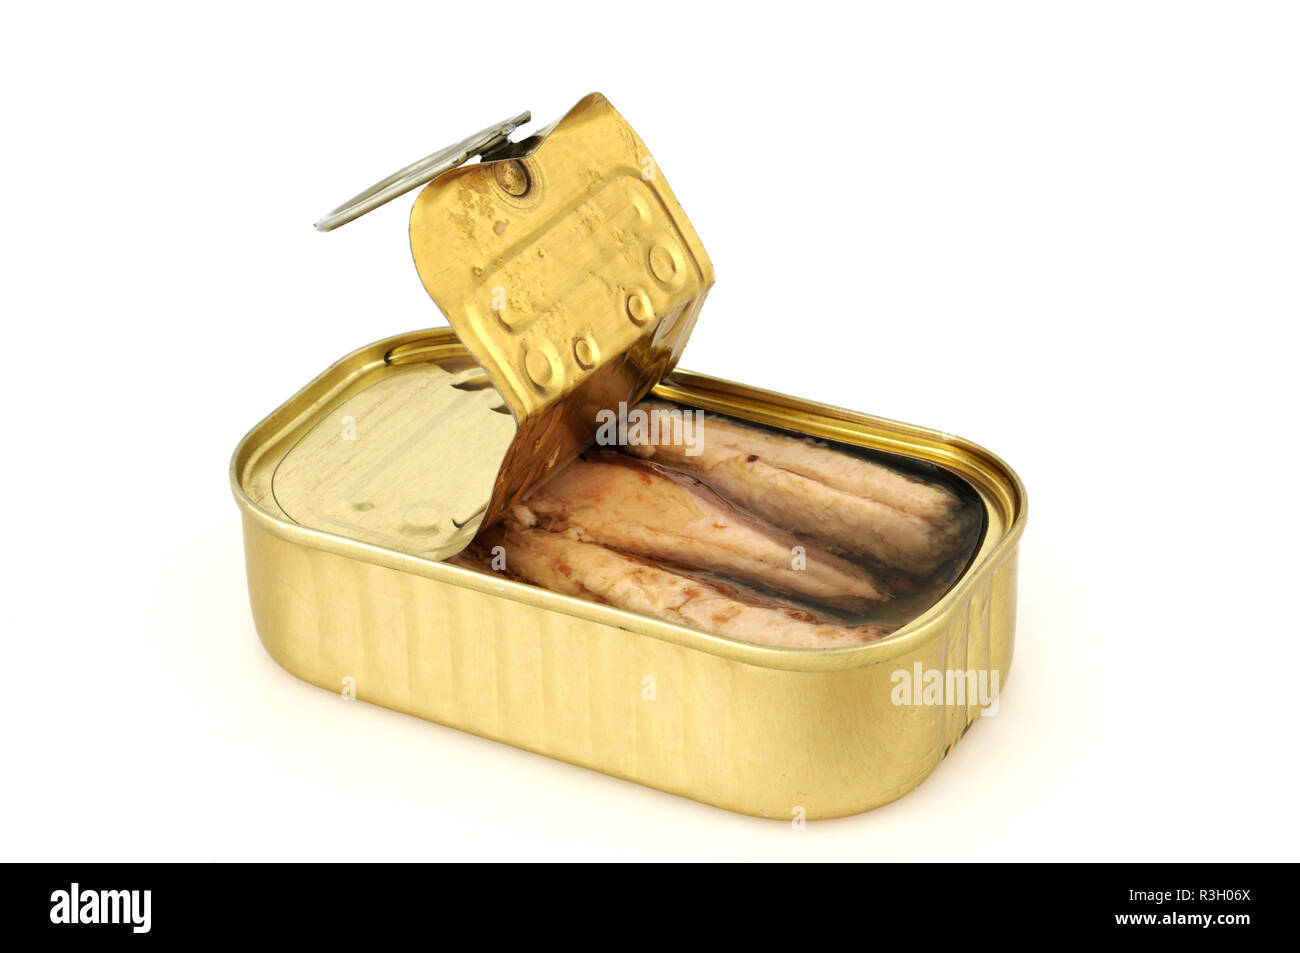 oil sardinendose / canned sardines Stock Photo